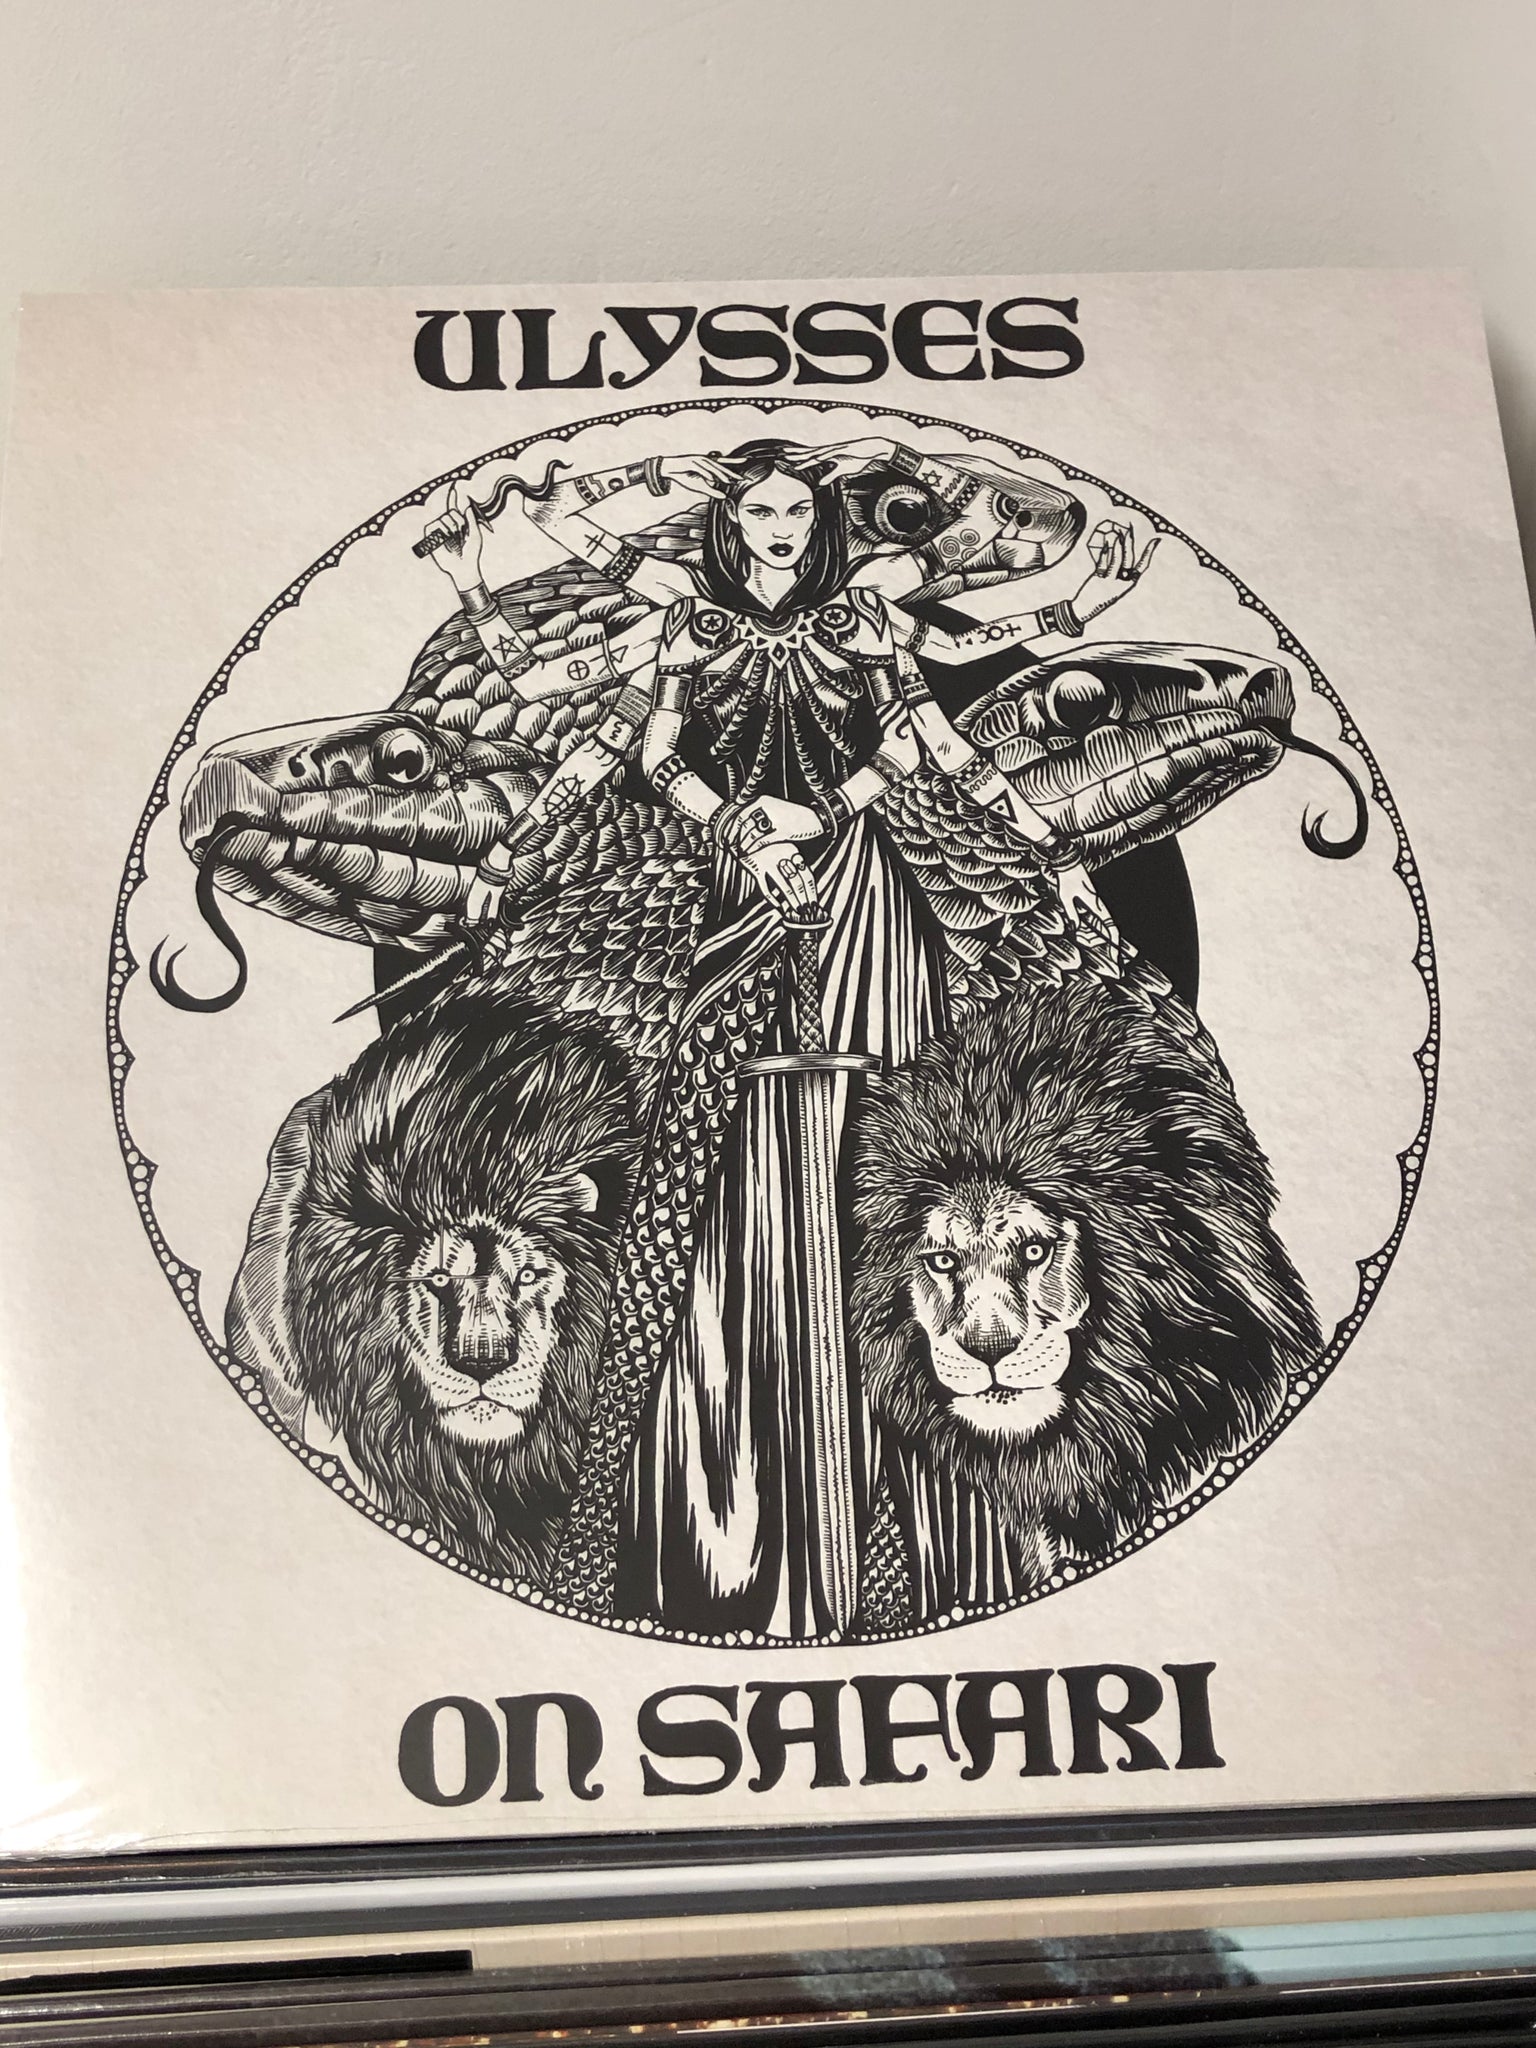 Ulysses on safari vinyl album new